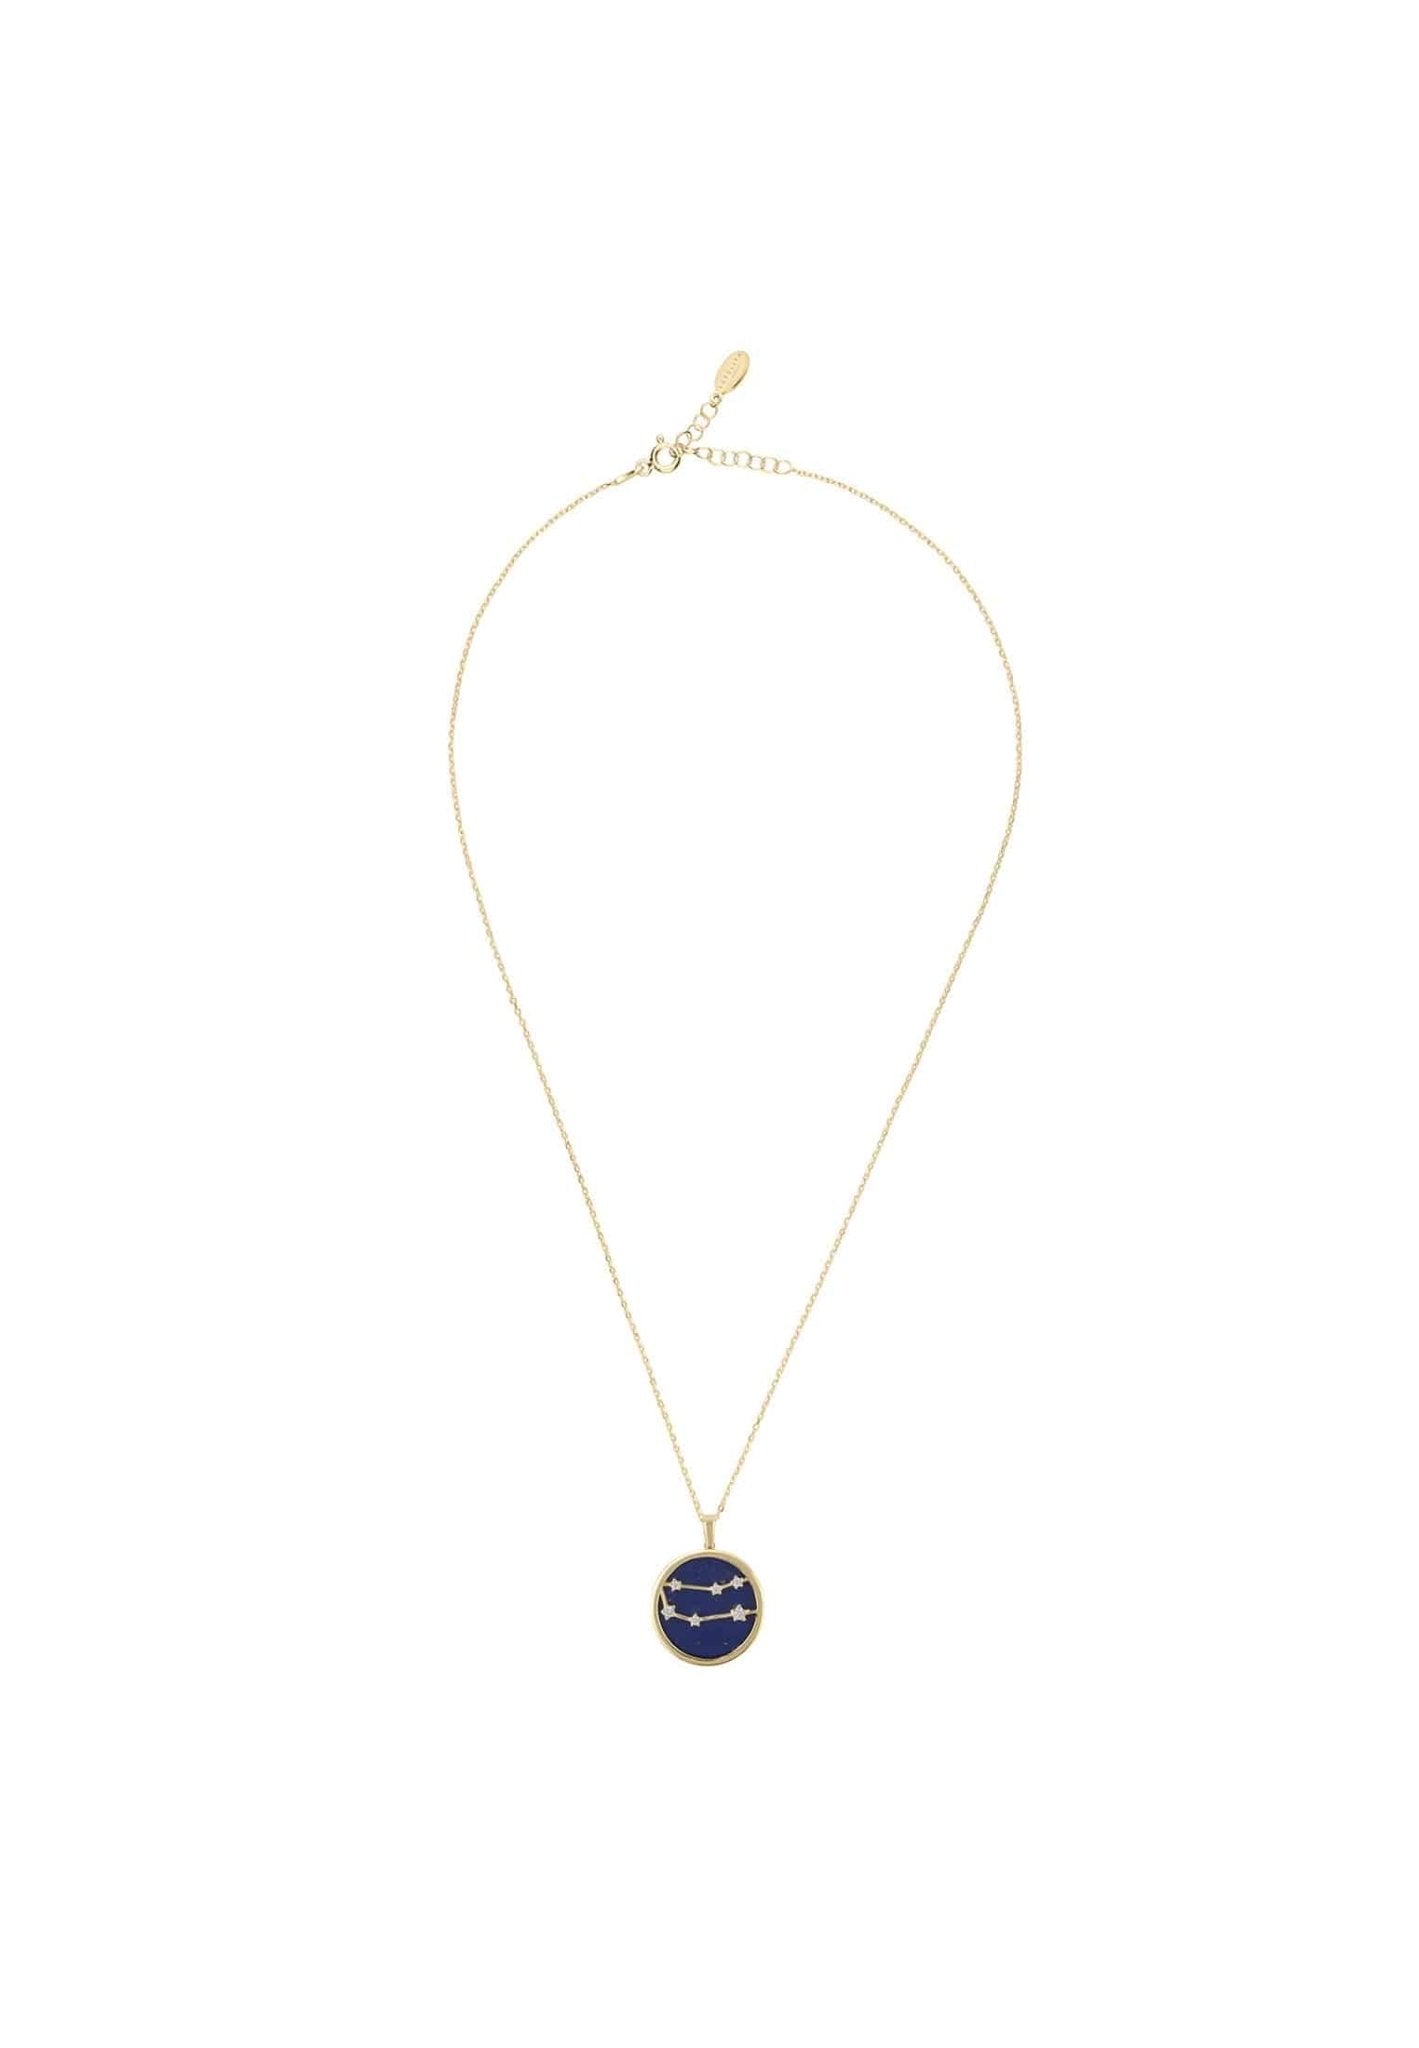 Zodiac Lapis Lazuli Gemstone Star Constellation Pendant Necklace Gold Gemini - LATELITA Necklaces